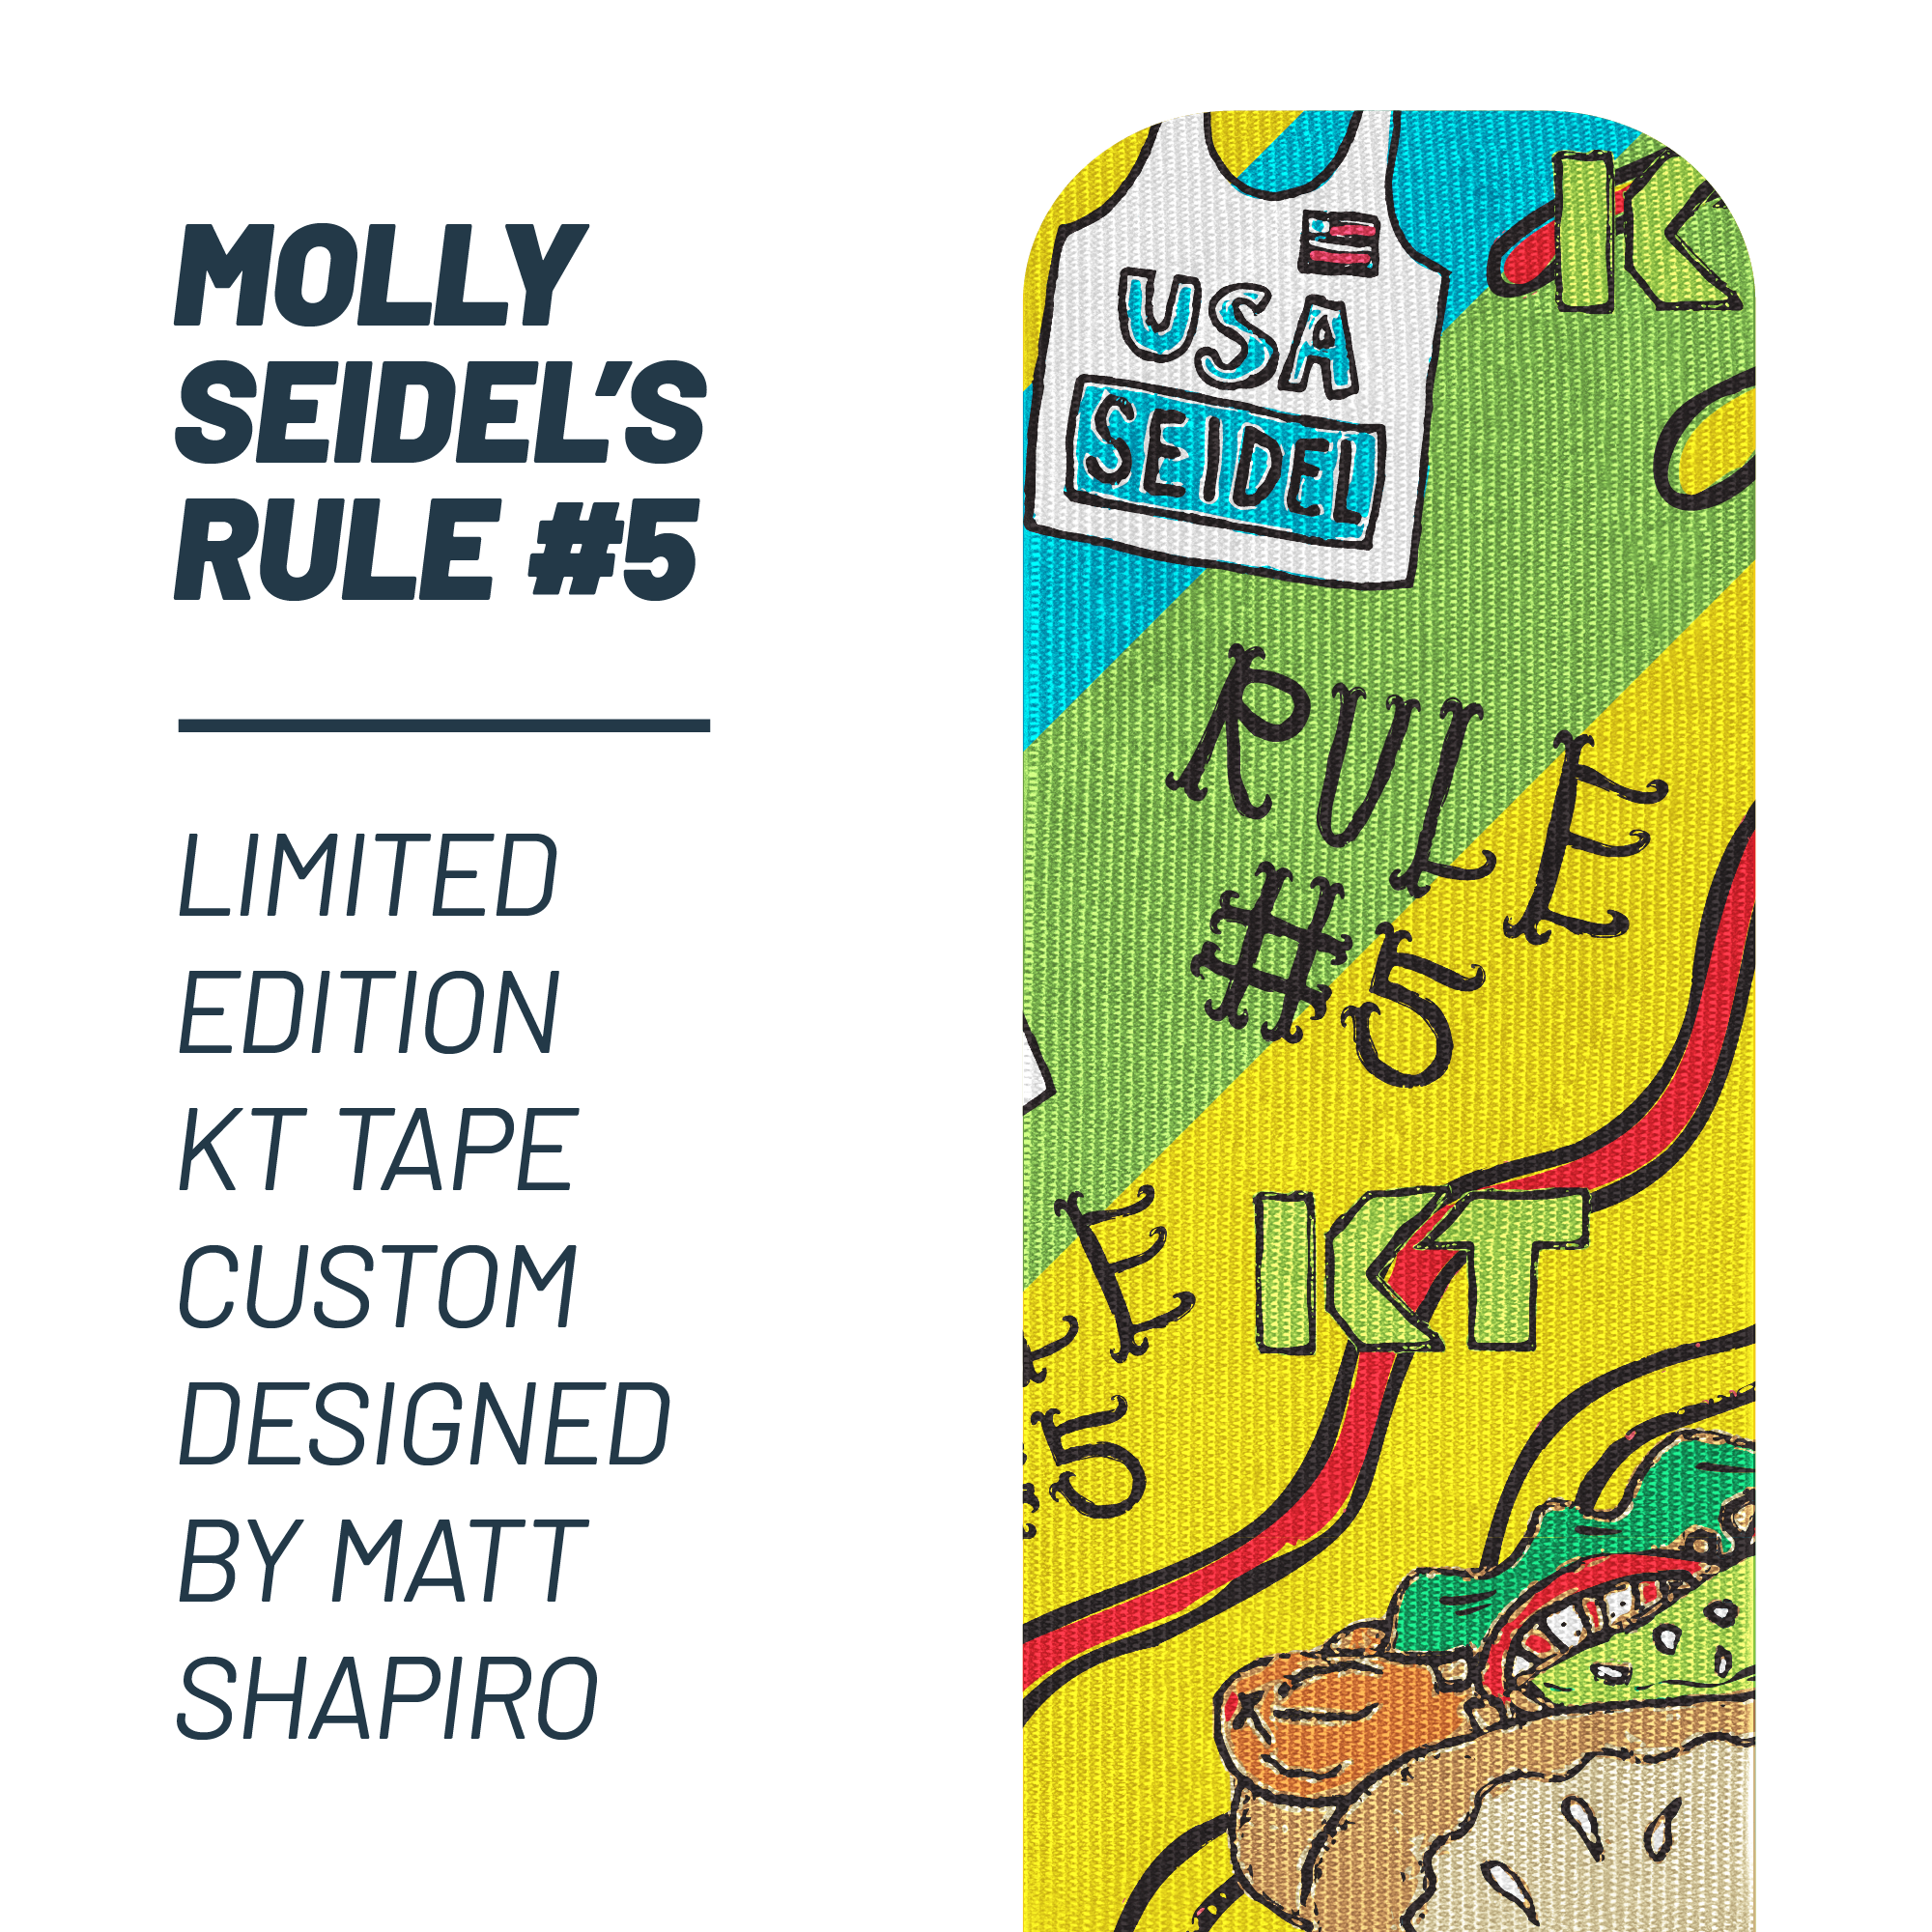 Molly's KT Marathon Bundle